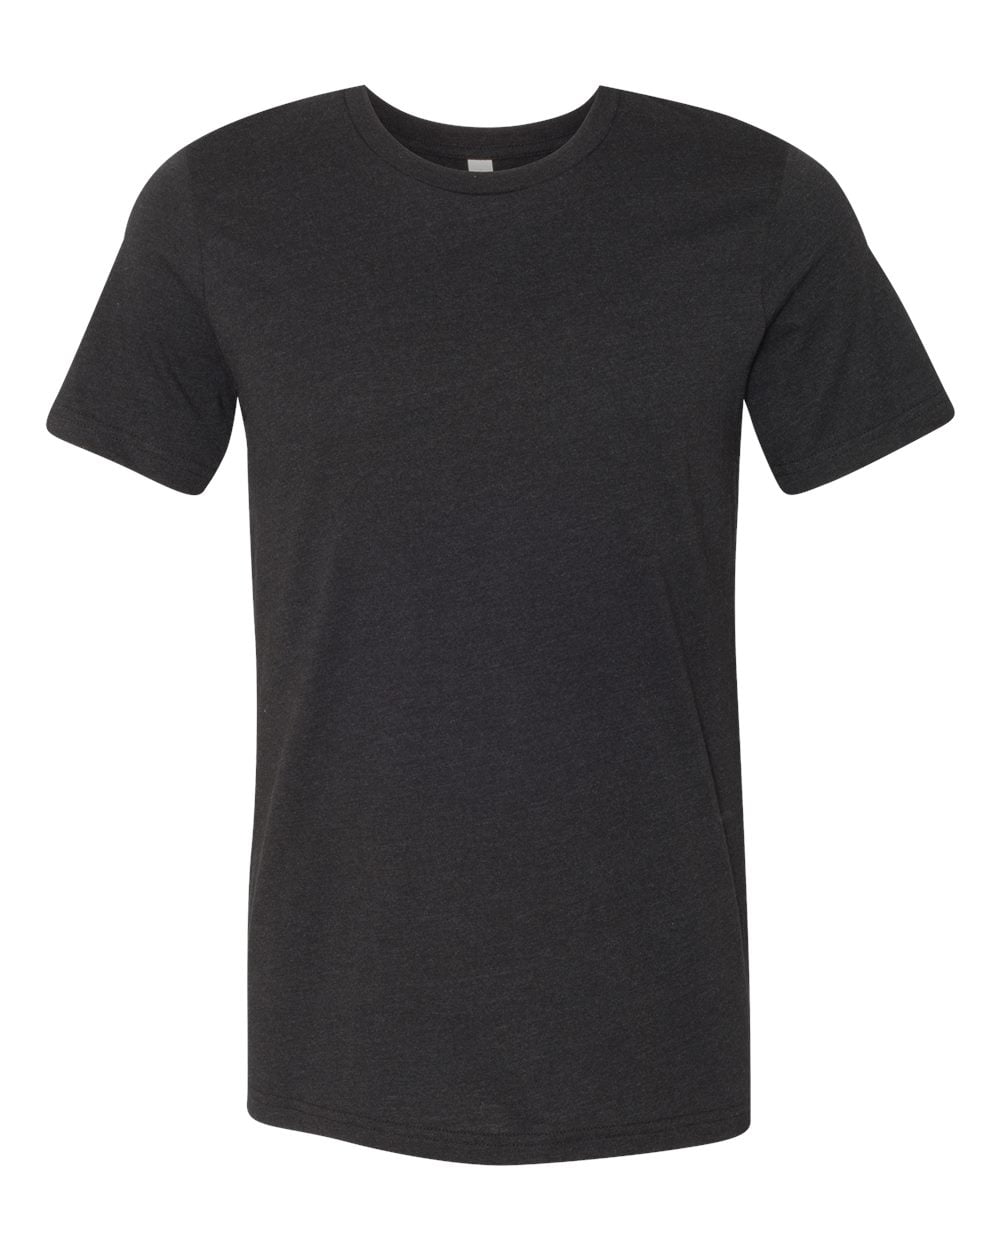 3001 Unisex Jersey T-Shirt - Black Heather - Small - Walmart.com